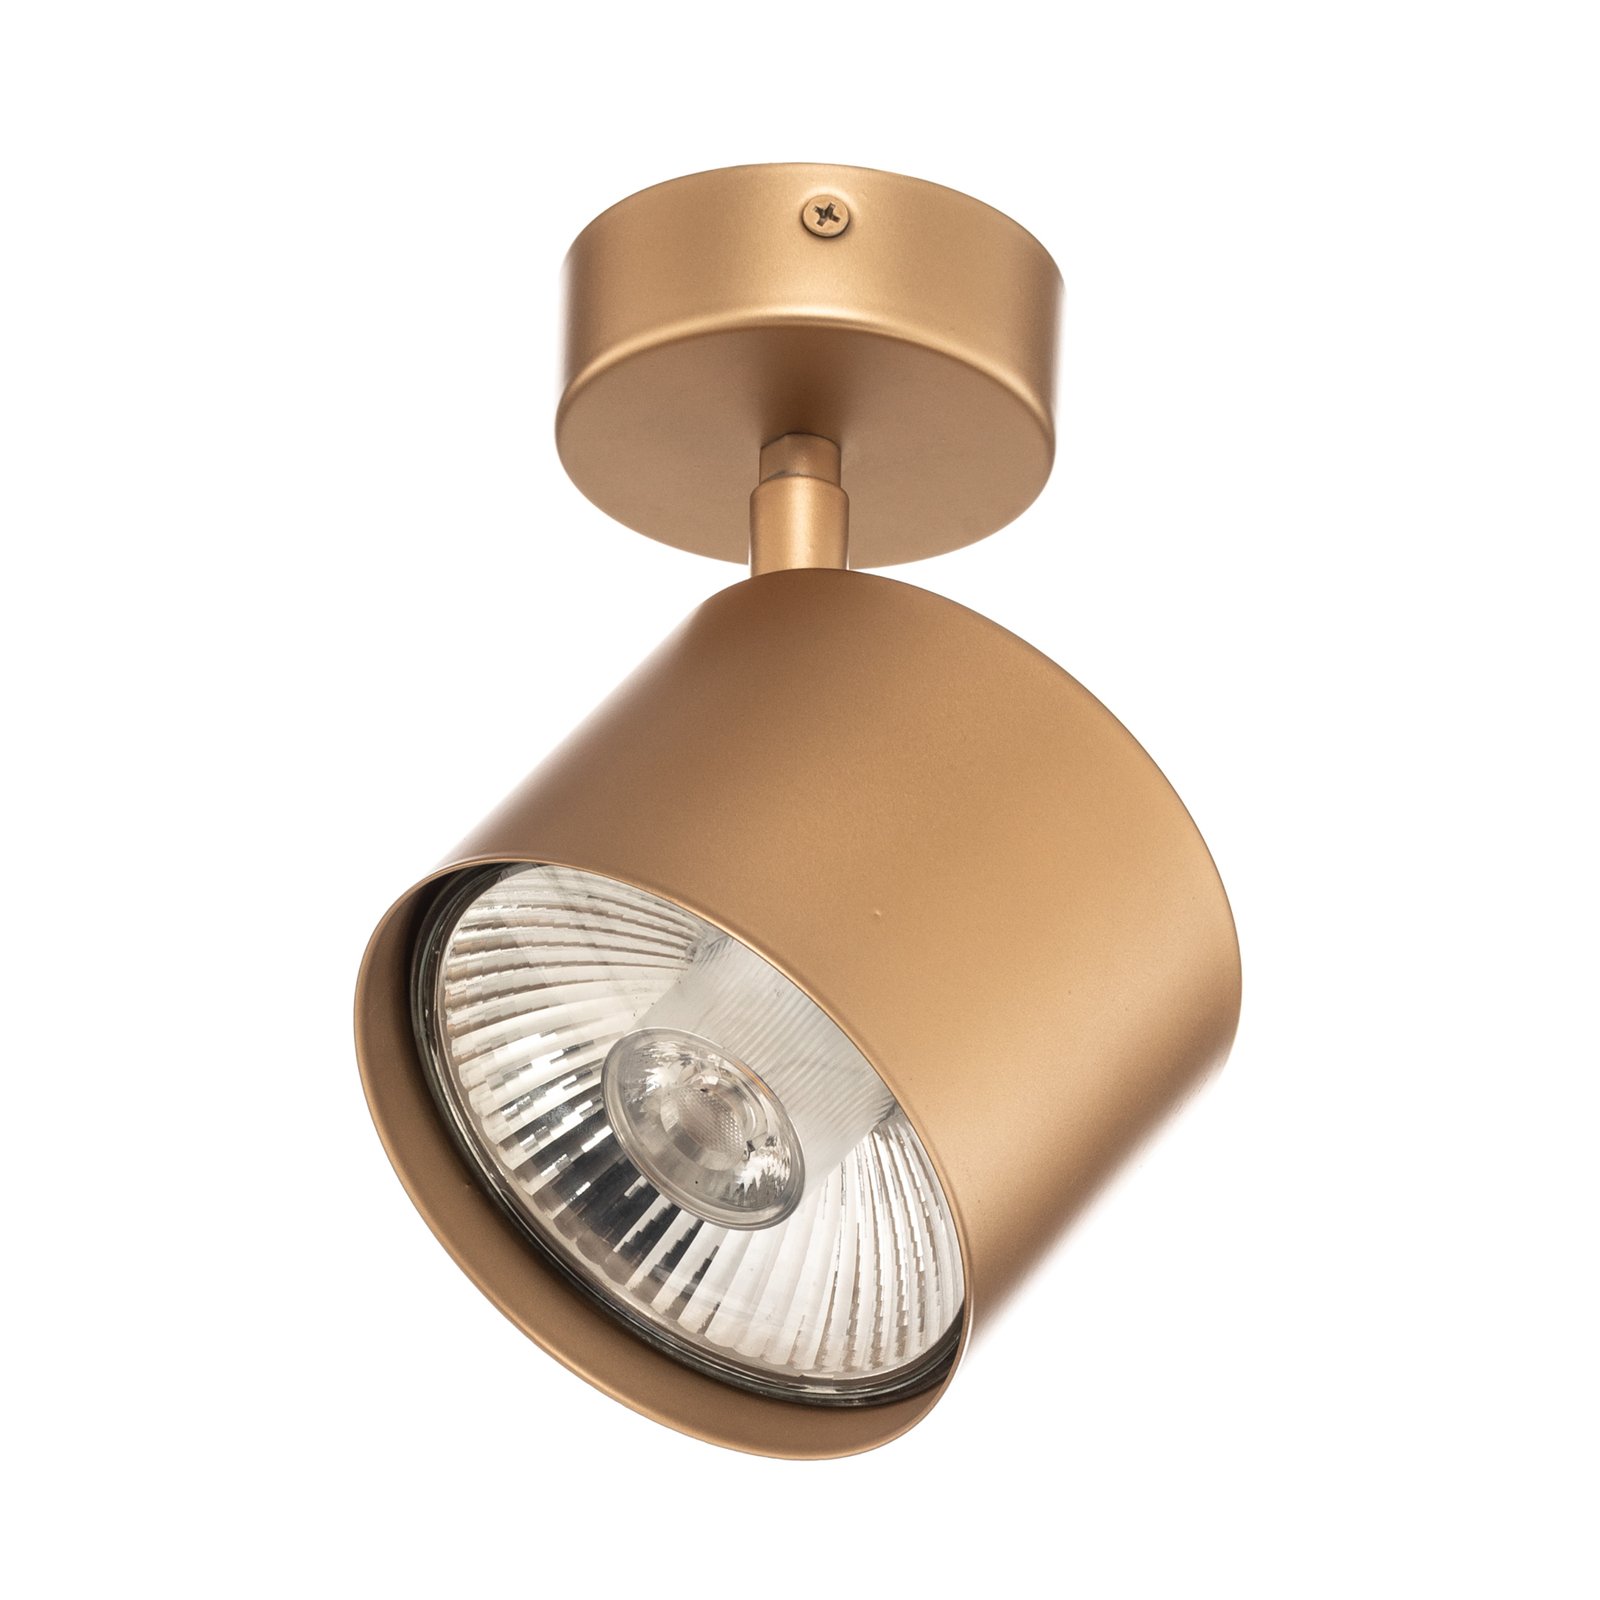 Chloe downlight adjustable 1-bulb, gold